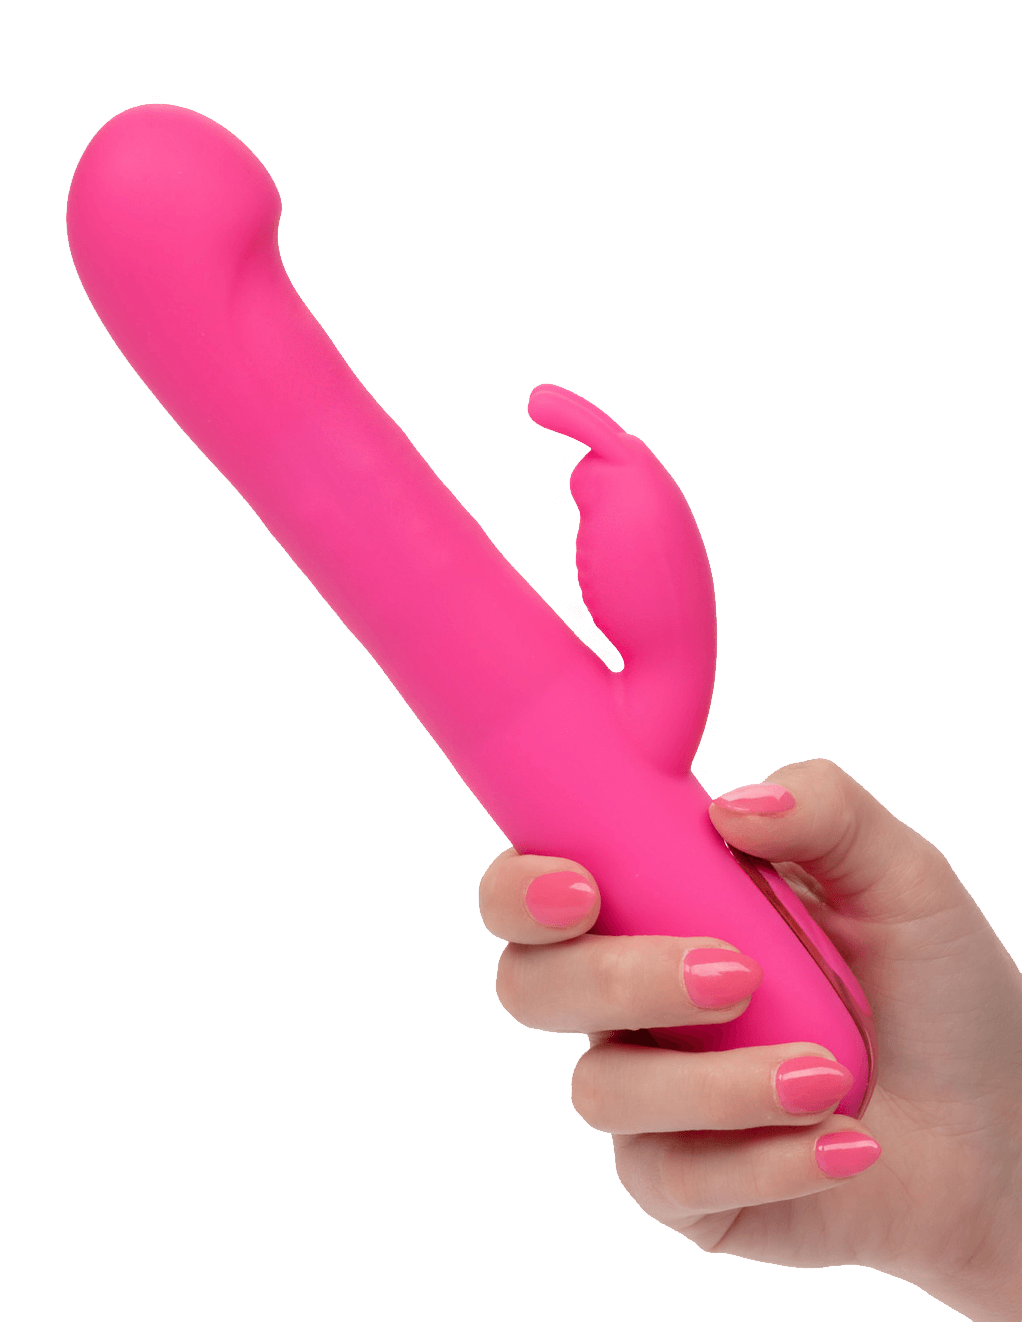 Jack Rabbit Elite Beaded G Rabbit Vibrator - Pink - In Hand